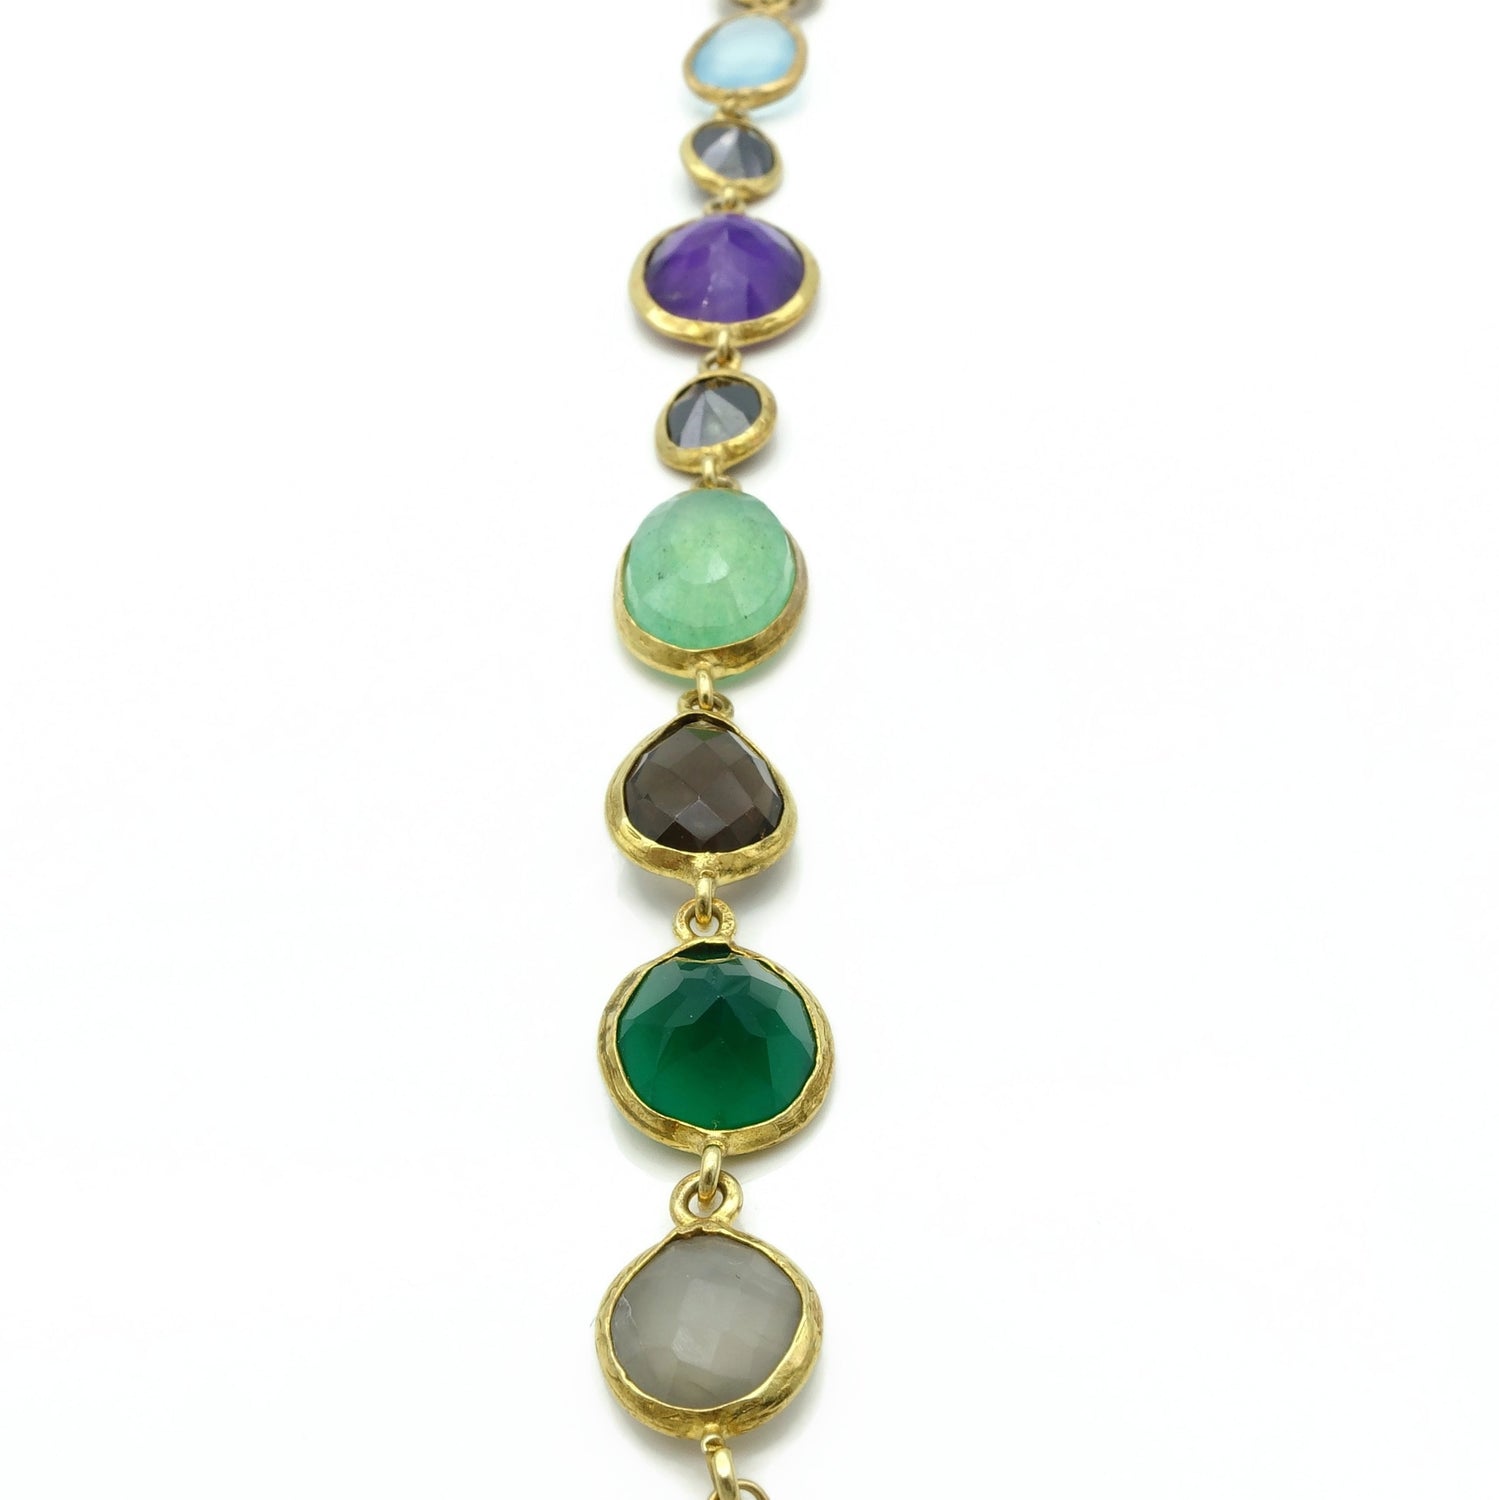 22ct gold plated Bracelet in Aquamarine Smoky Amethyst Multi semi precious gemstones